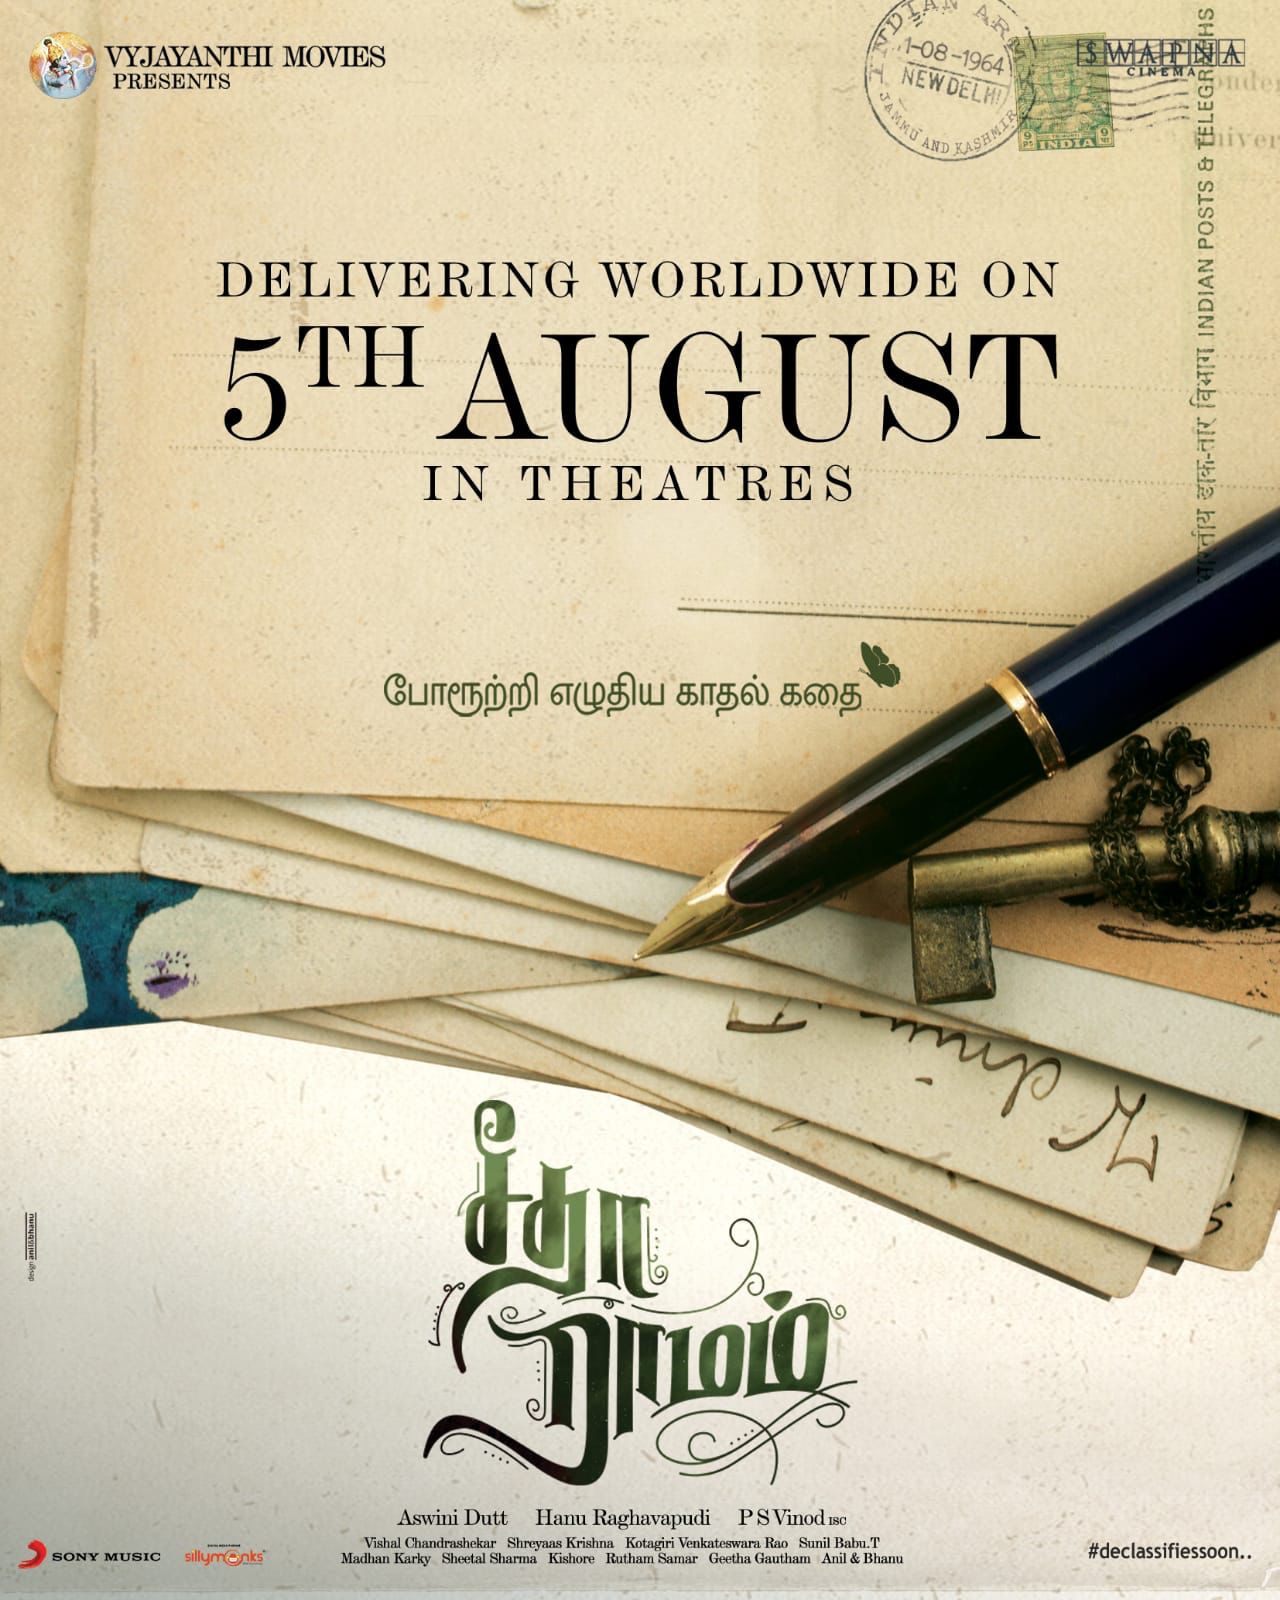 Dulquer Salmaan Rashmika Mandanna Sita Ramam is Releasing Worldwide In Theaters On 5th August